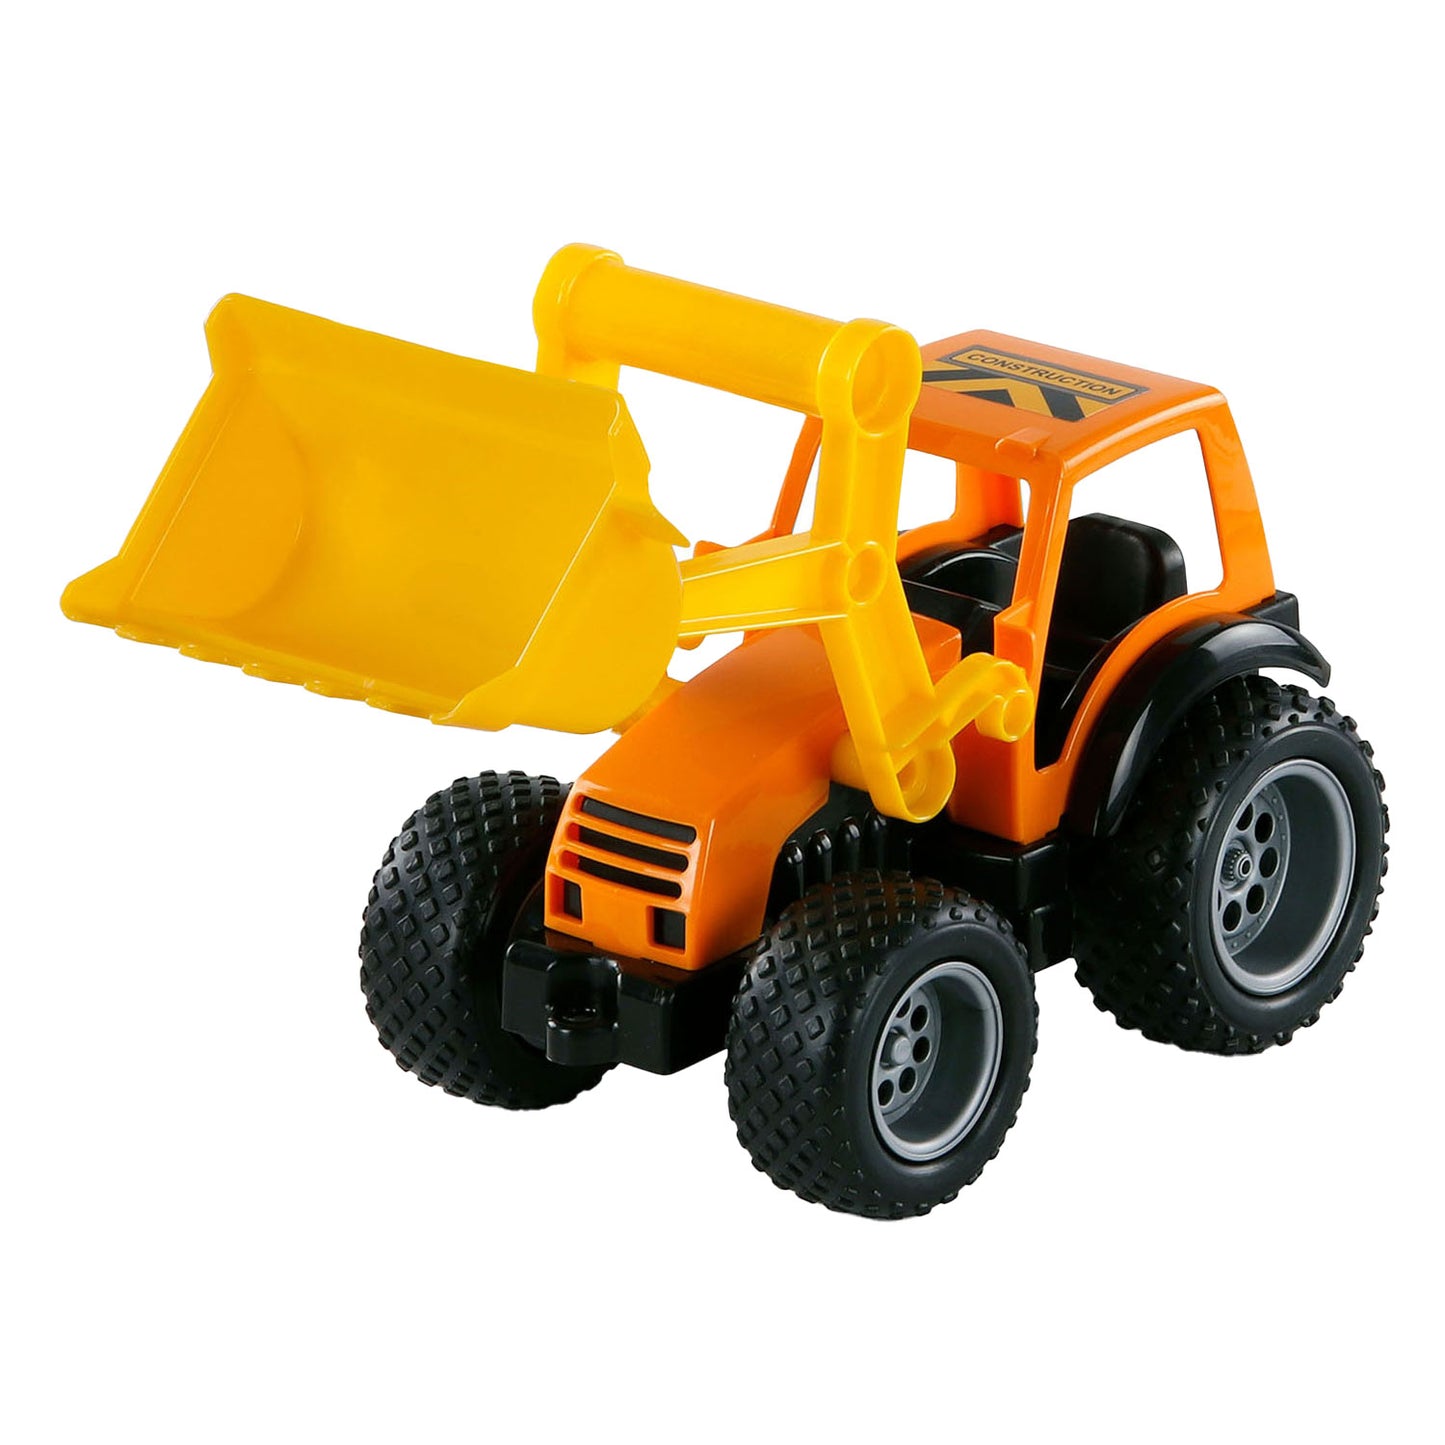 Cavallino Toys Cavallino Grip Tractor met Rubberbanden, 32cm